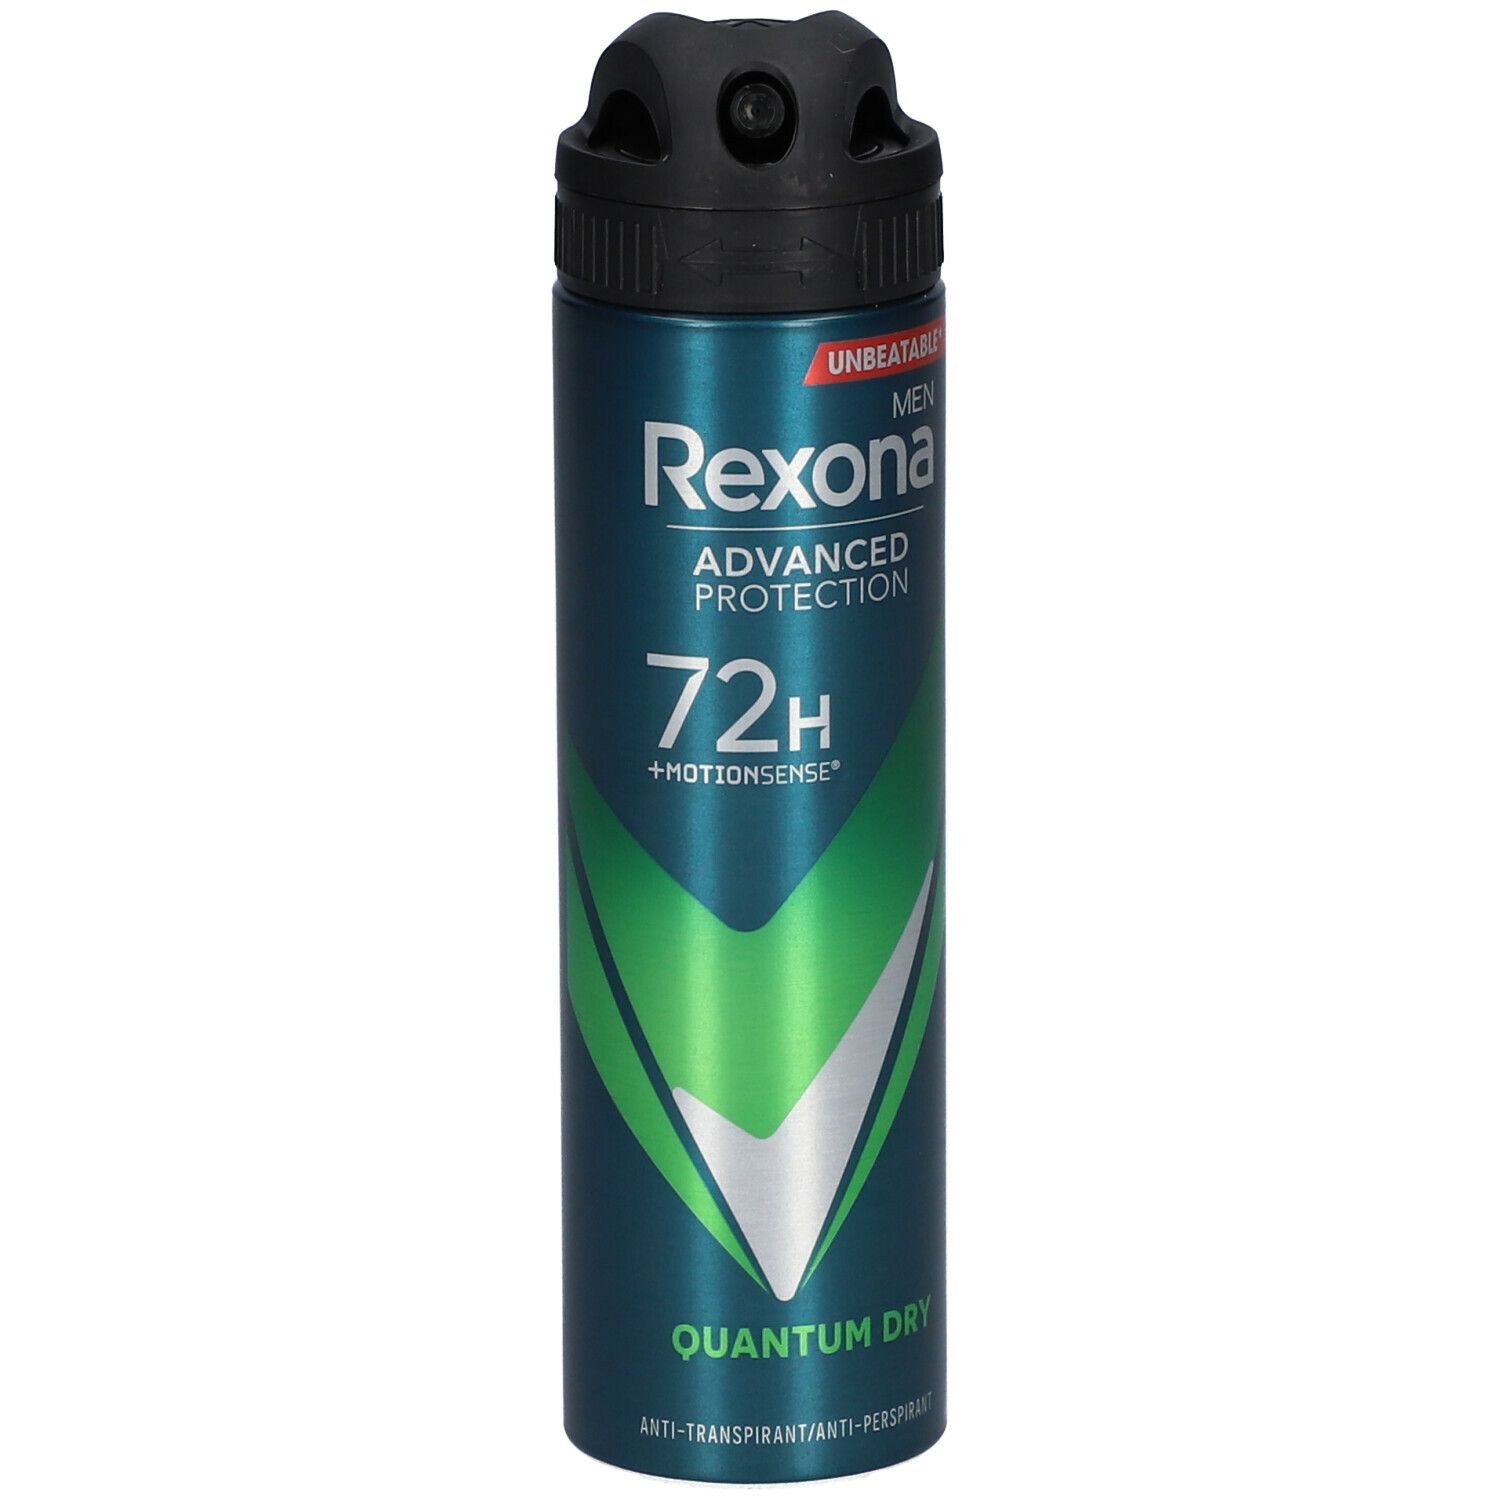 Rexona Men Advanced Protection Quantum Dry Anti-Transpirant Déodorant Spray 72h